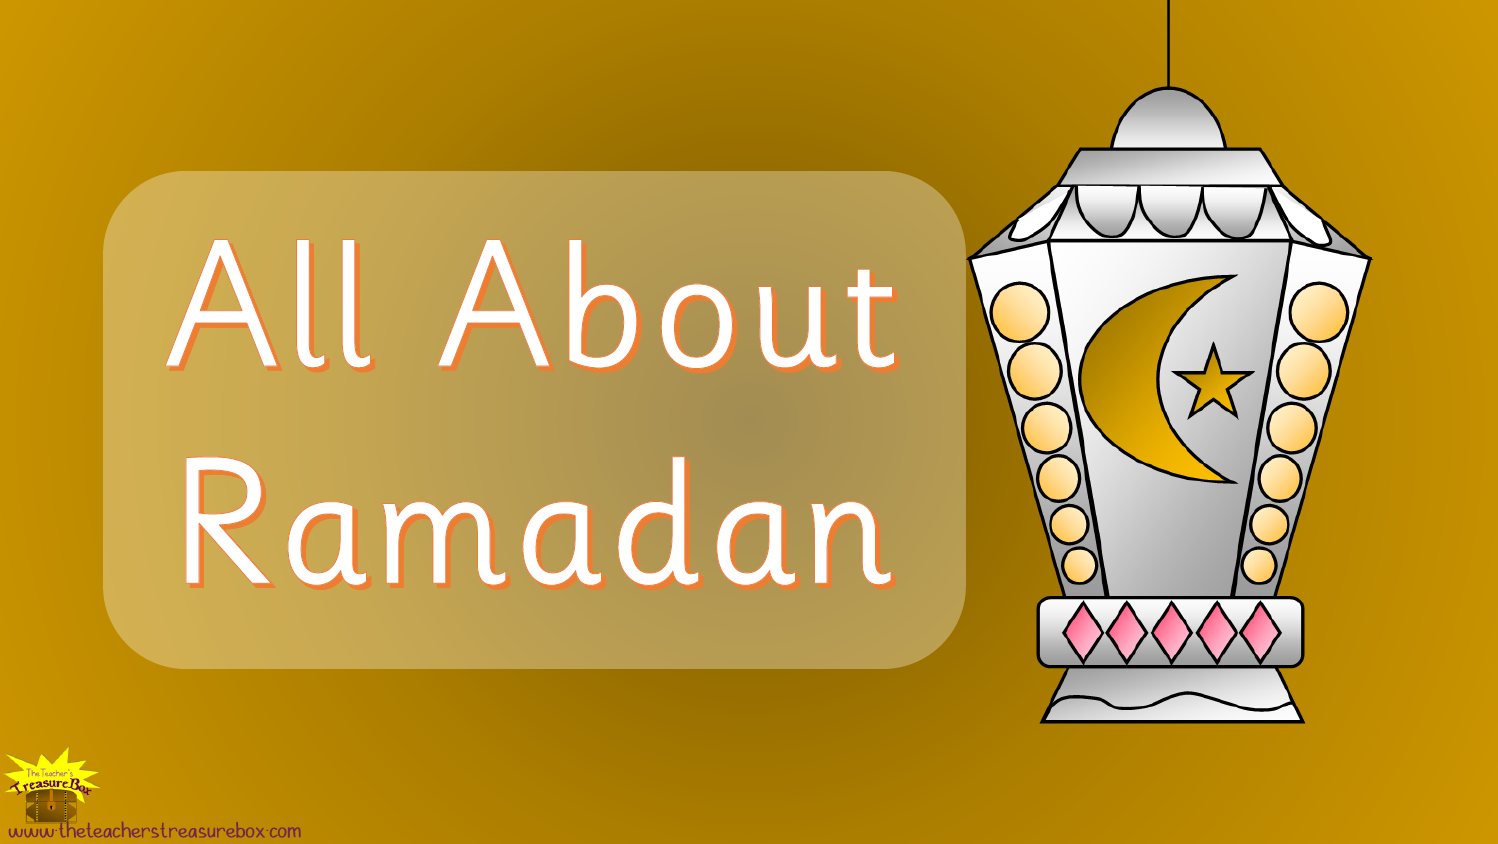 All About Ramadan Presentation